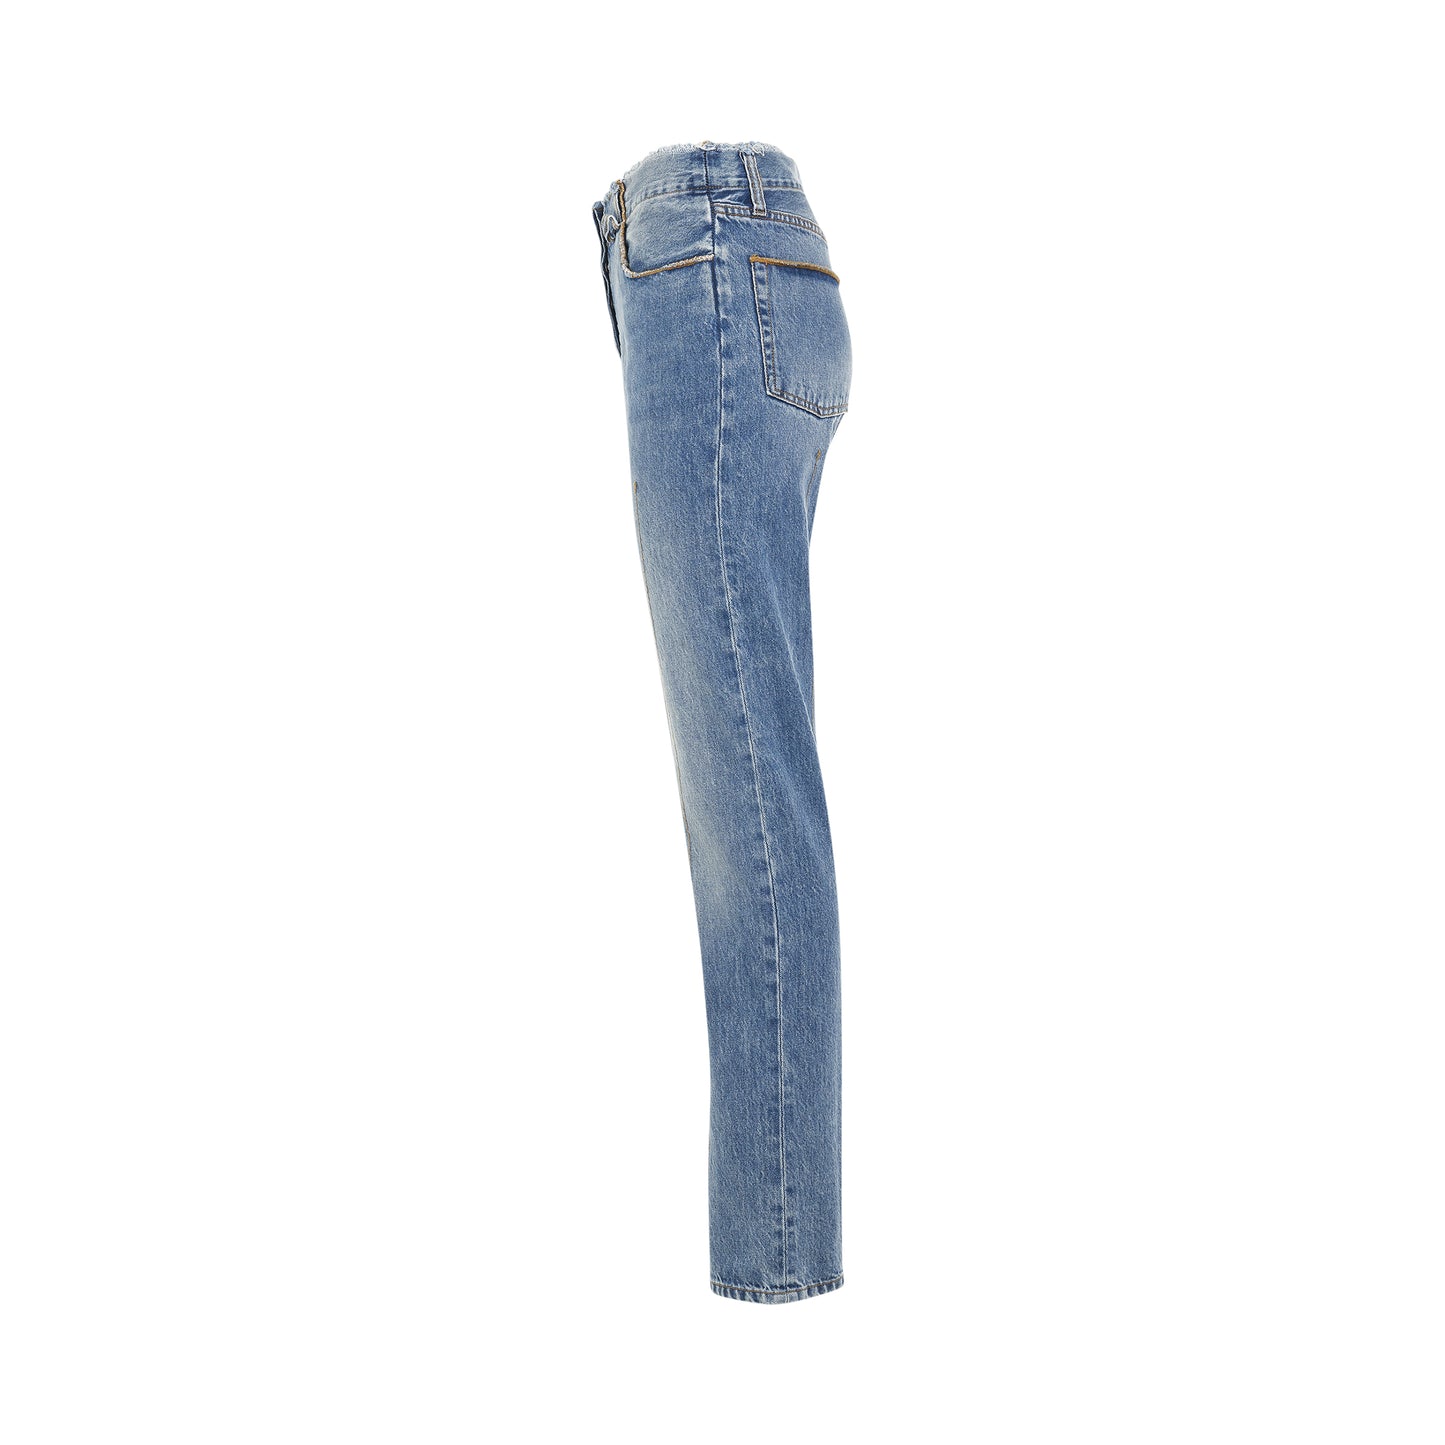 Linon Denim Pants in Light Blue/Tabac